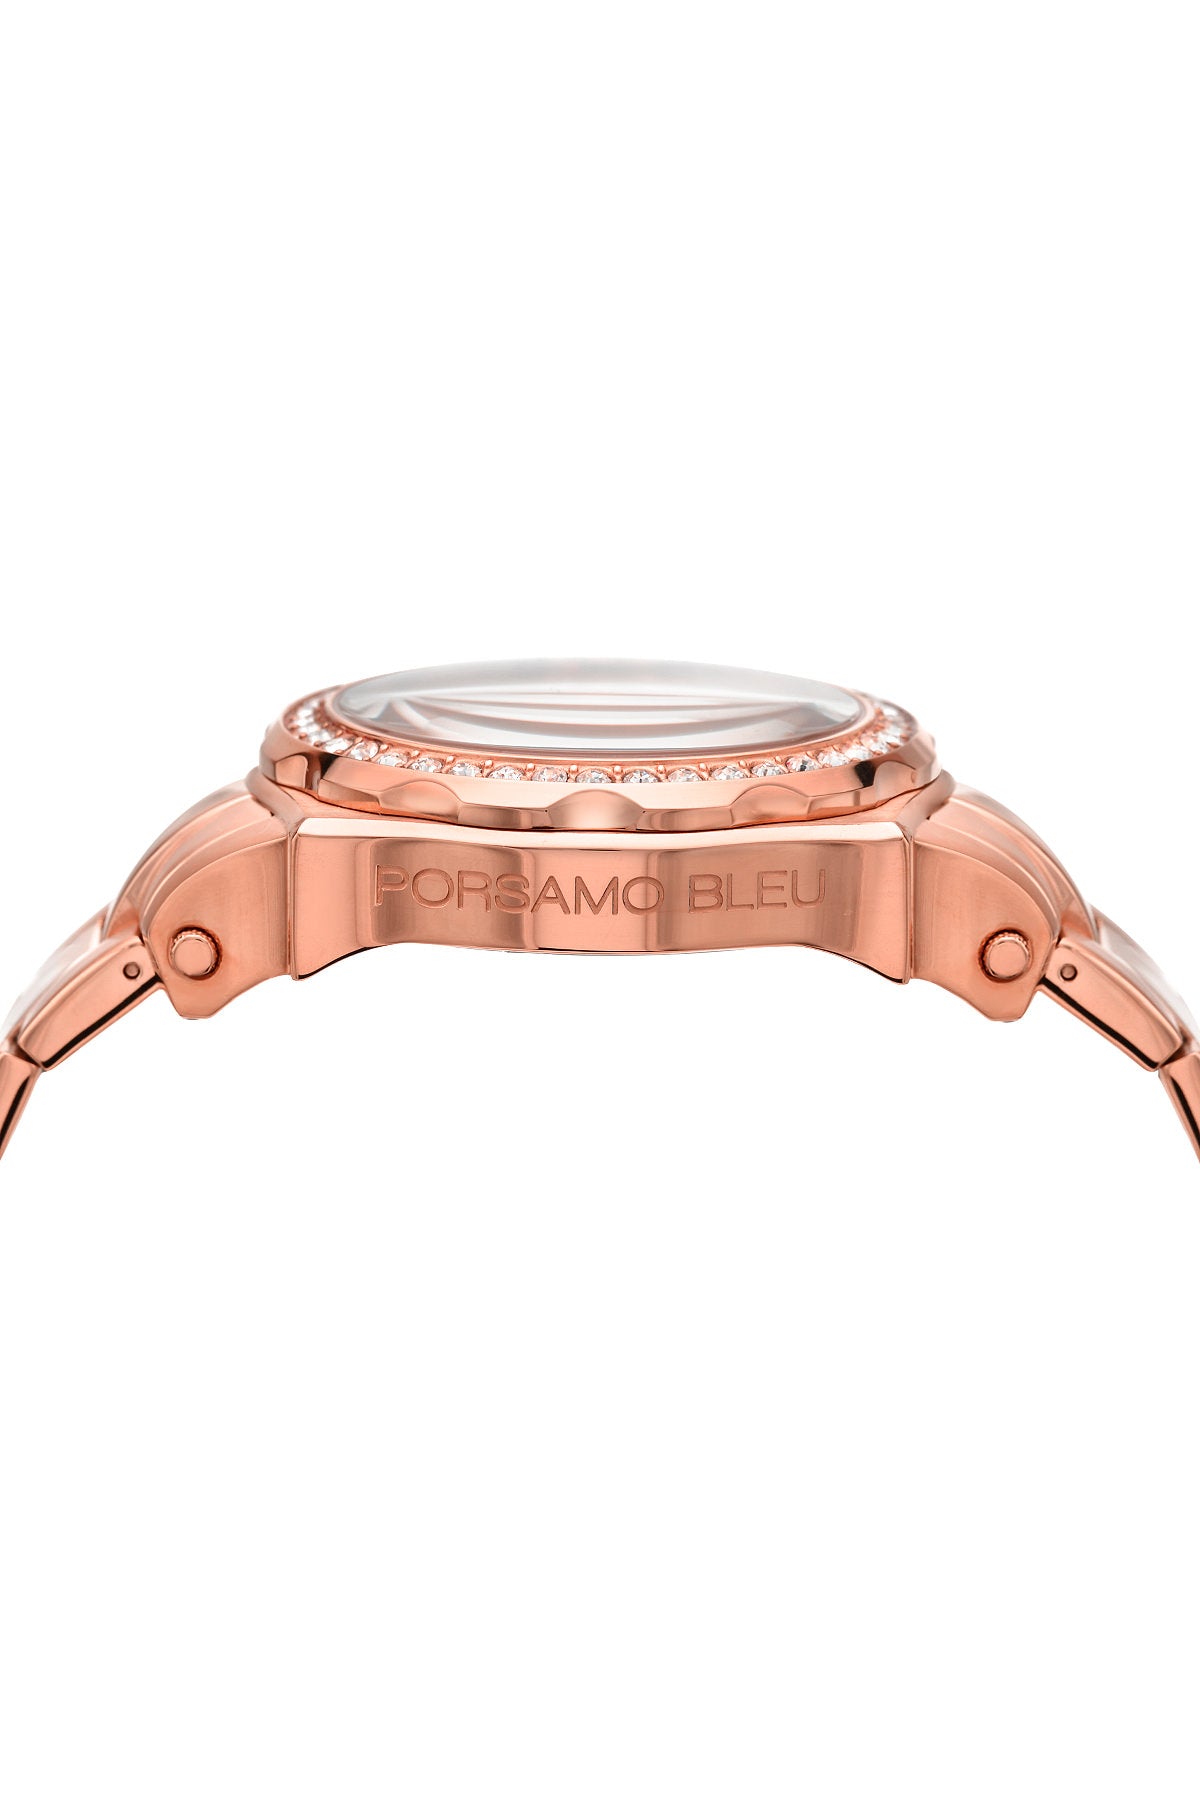 Porsamo Bleu Milan Crystal luxury women's stainless steel watch, Swarovski® crystals, rose, 038GMCS